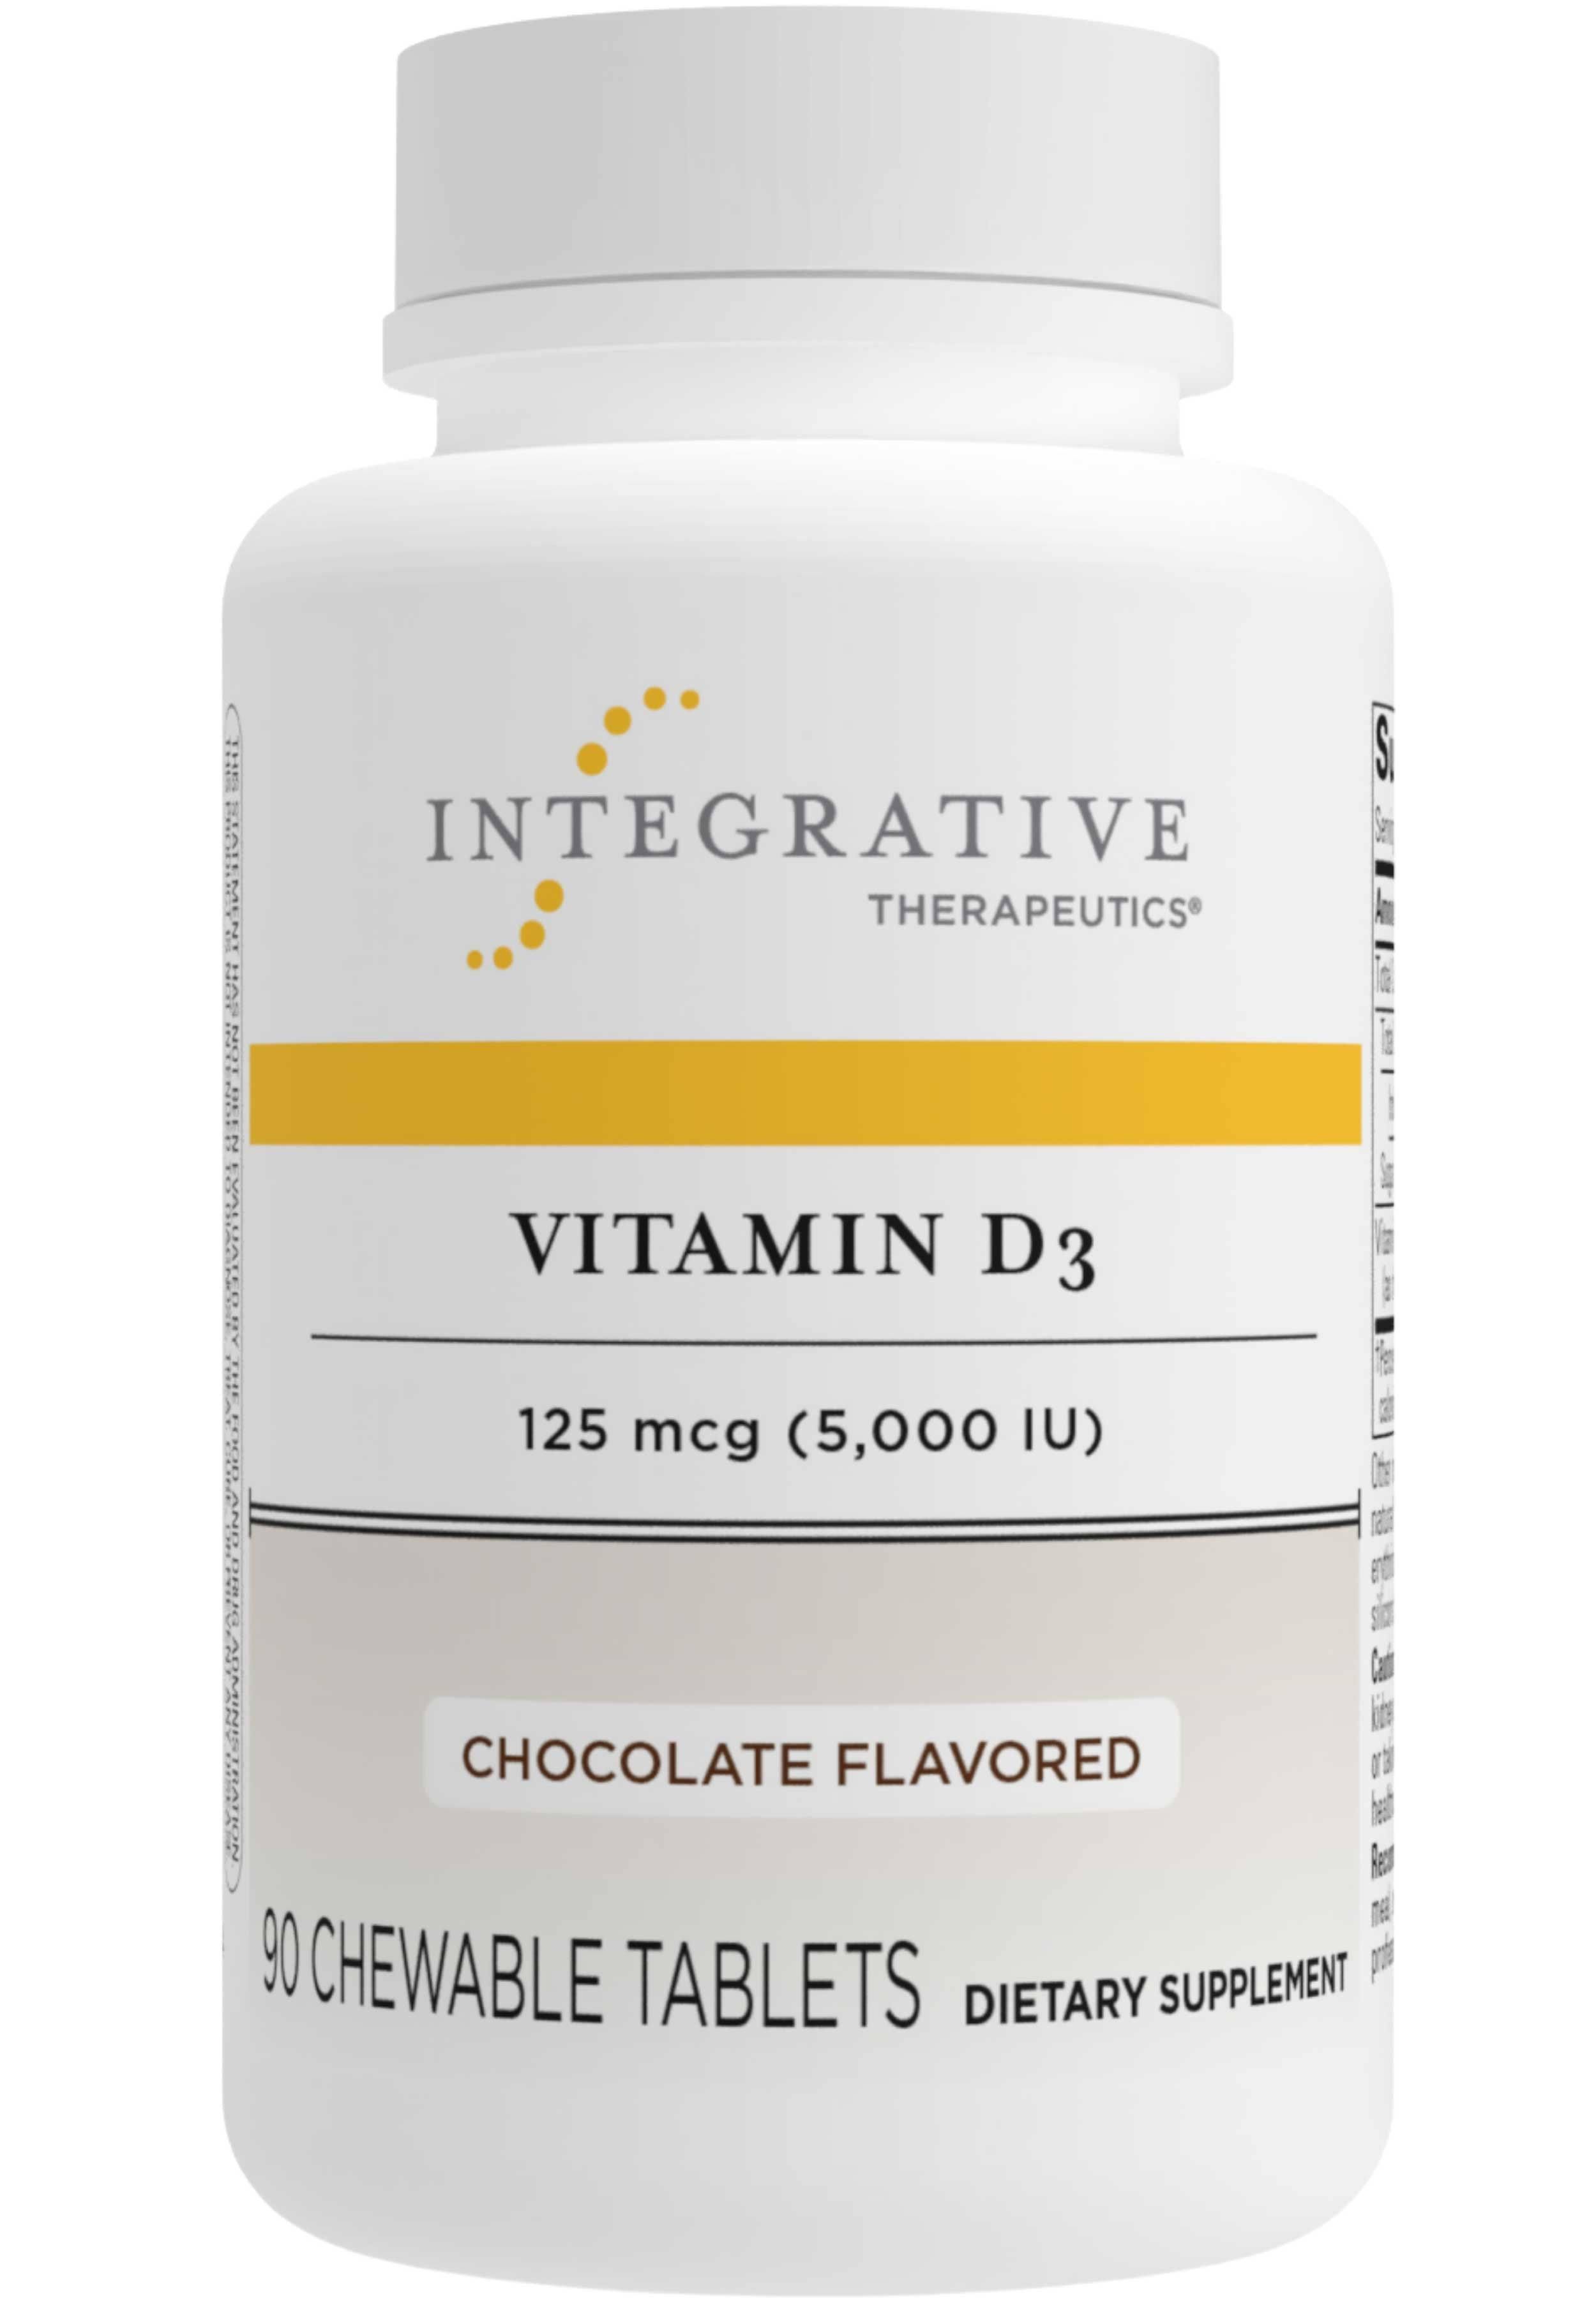 Integrative Therapeutics Vitamin D3 5,000 IU Chewable Tablets - Chocolate, x90